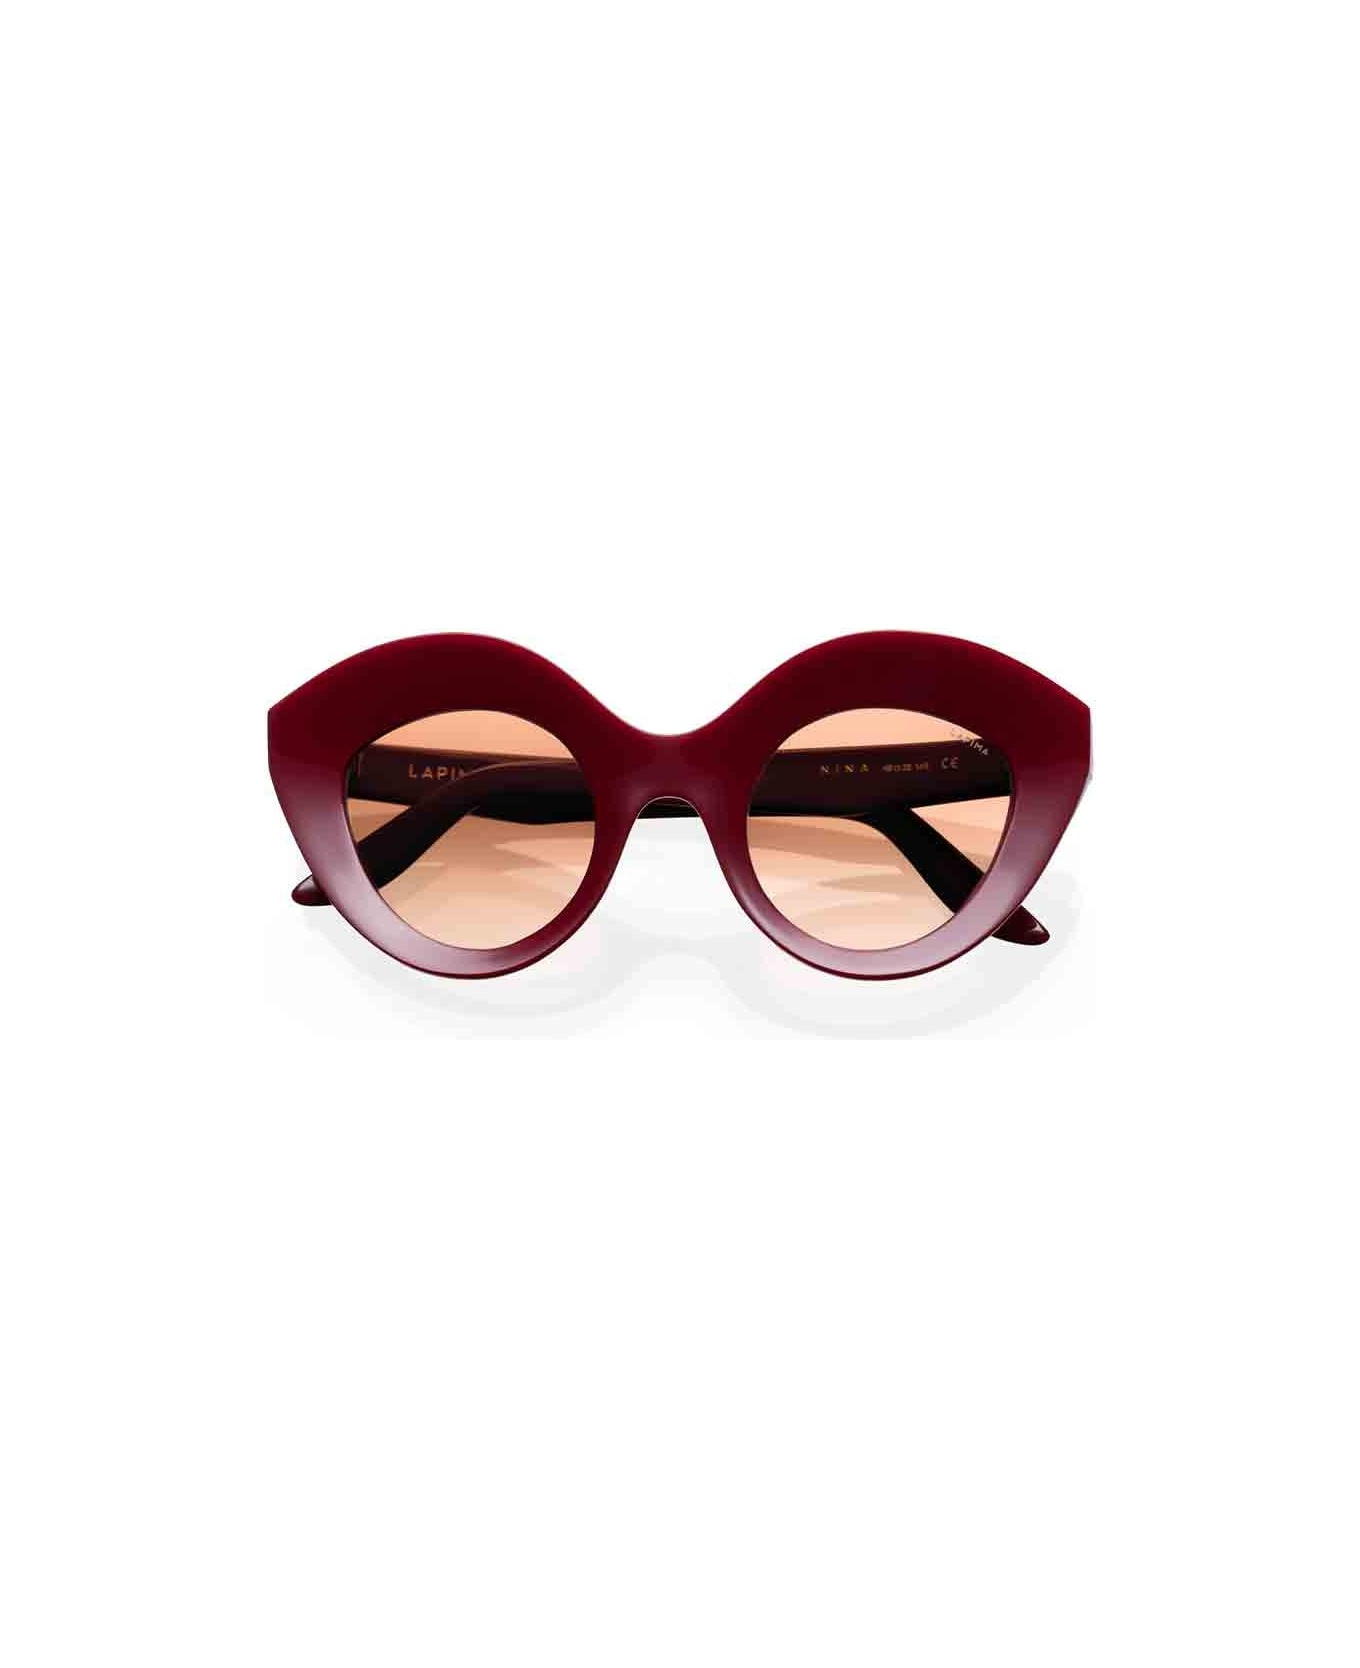 Lapima Eyewear - Burgundy/Rosso sfumato